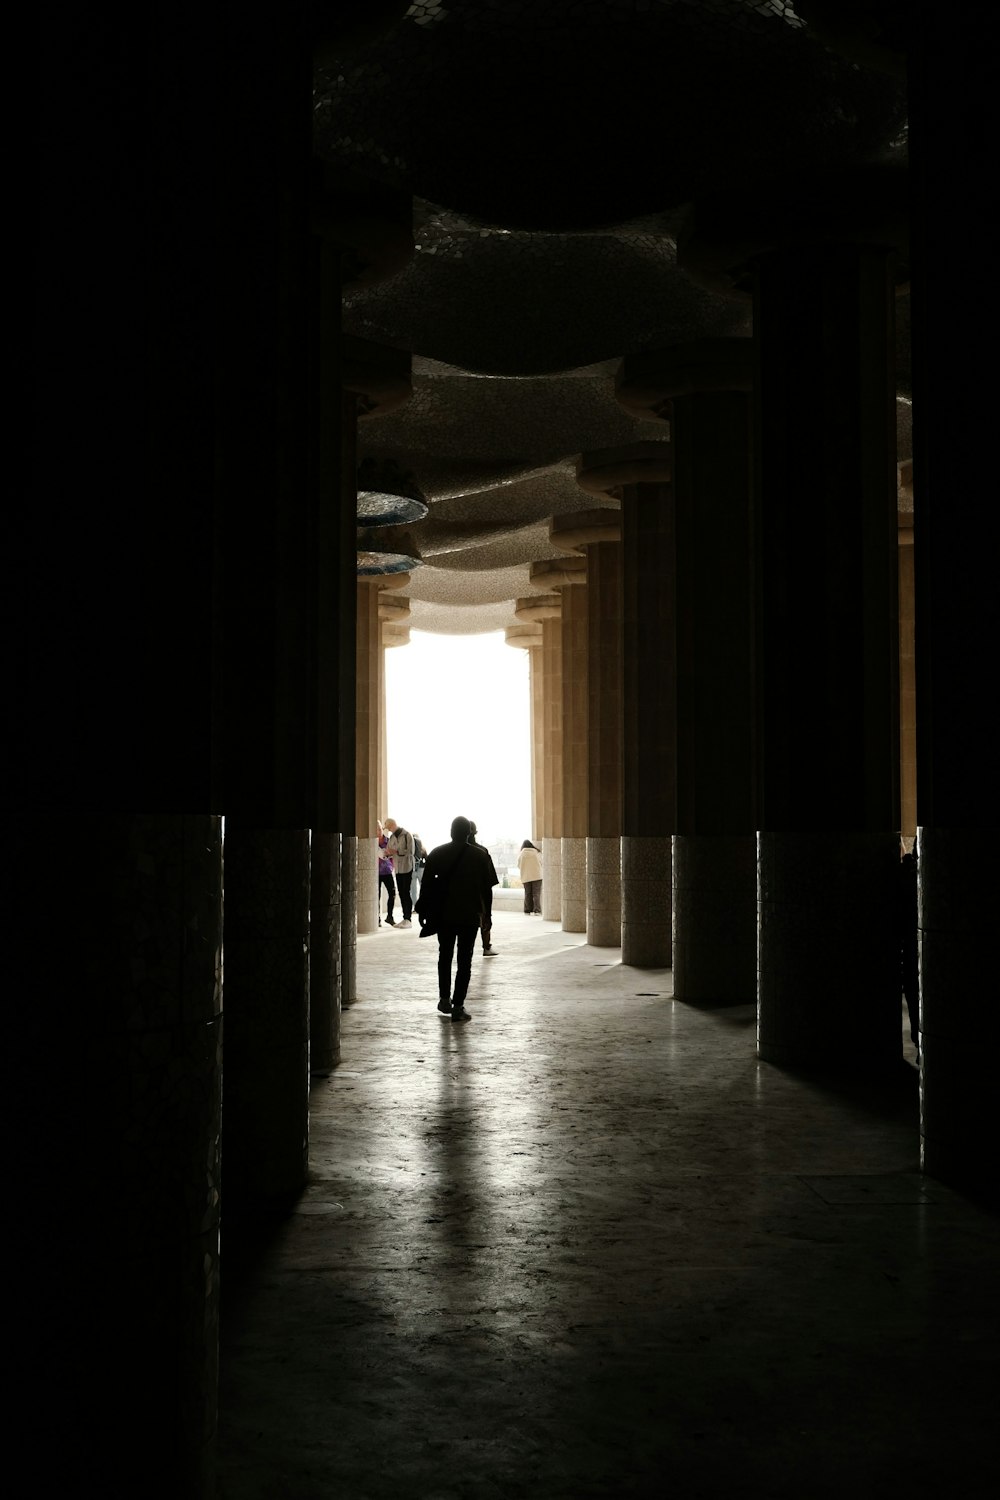 a group of people walking down a dark hallway